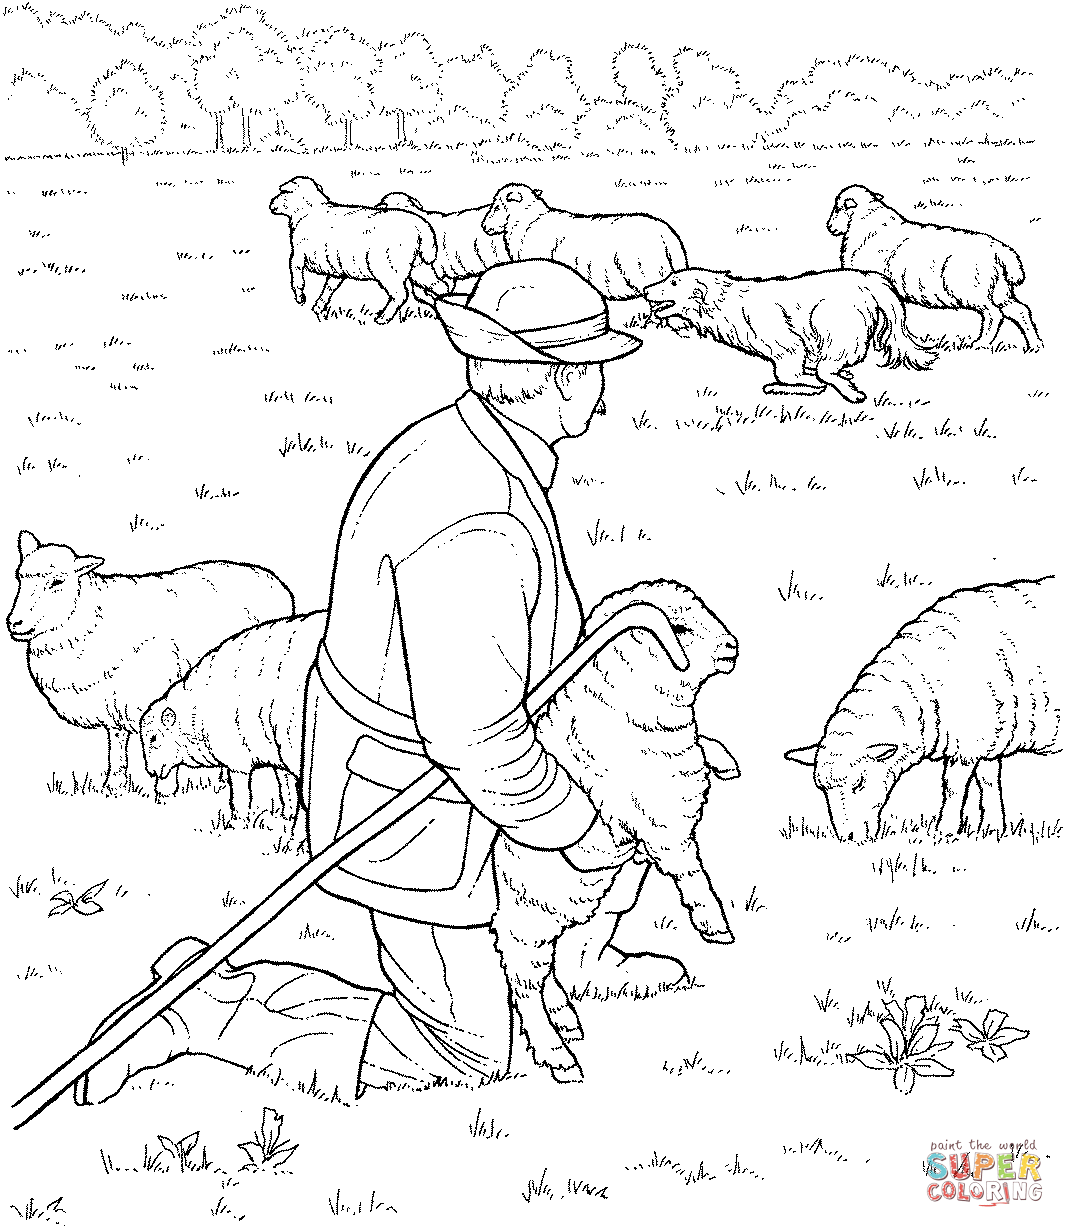 German Shepherd Sitting coloring page | Free Printable Coloring Pages